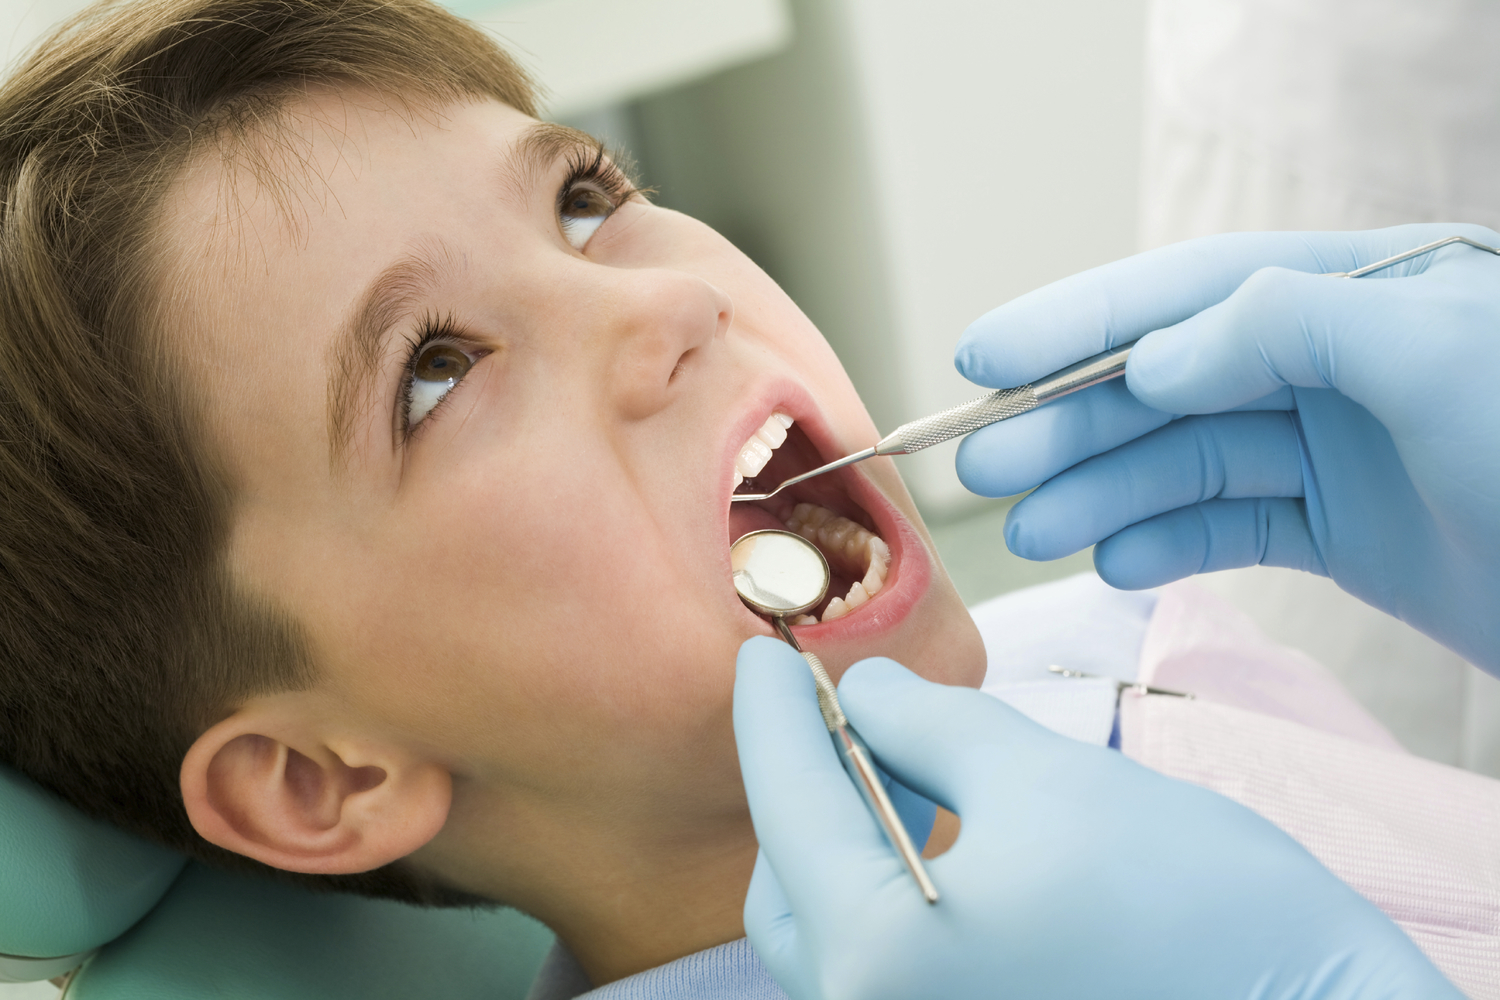 Dentist Pass: Συνεχίζεται η υποβολή αιτήσεων – Πάνω από 86.000 αιτήσεις